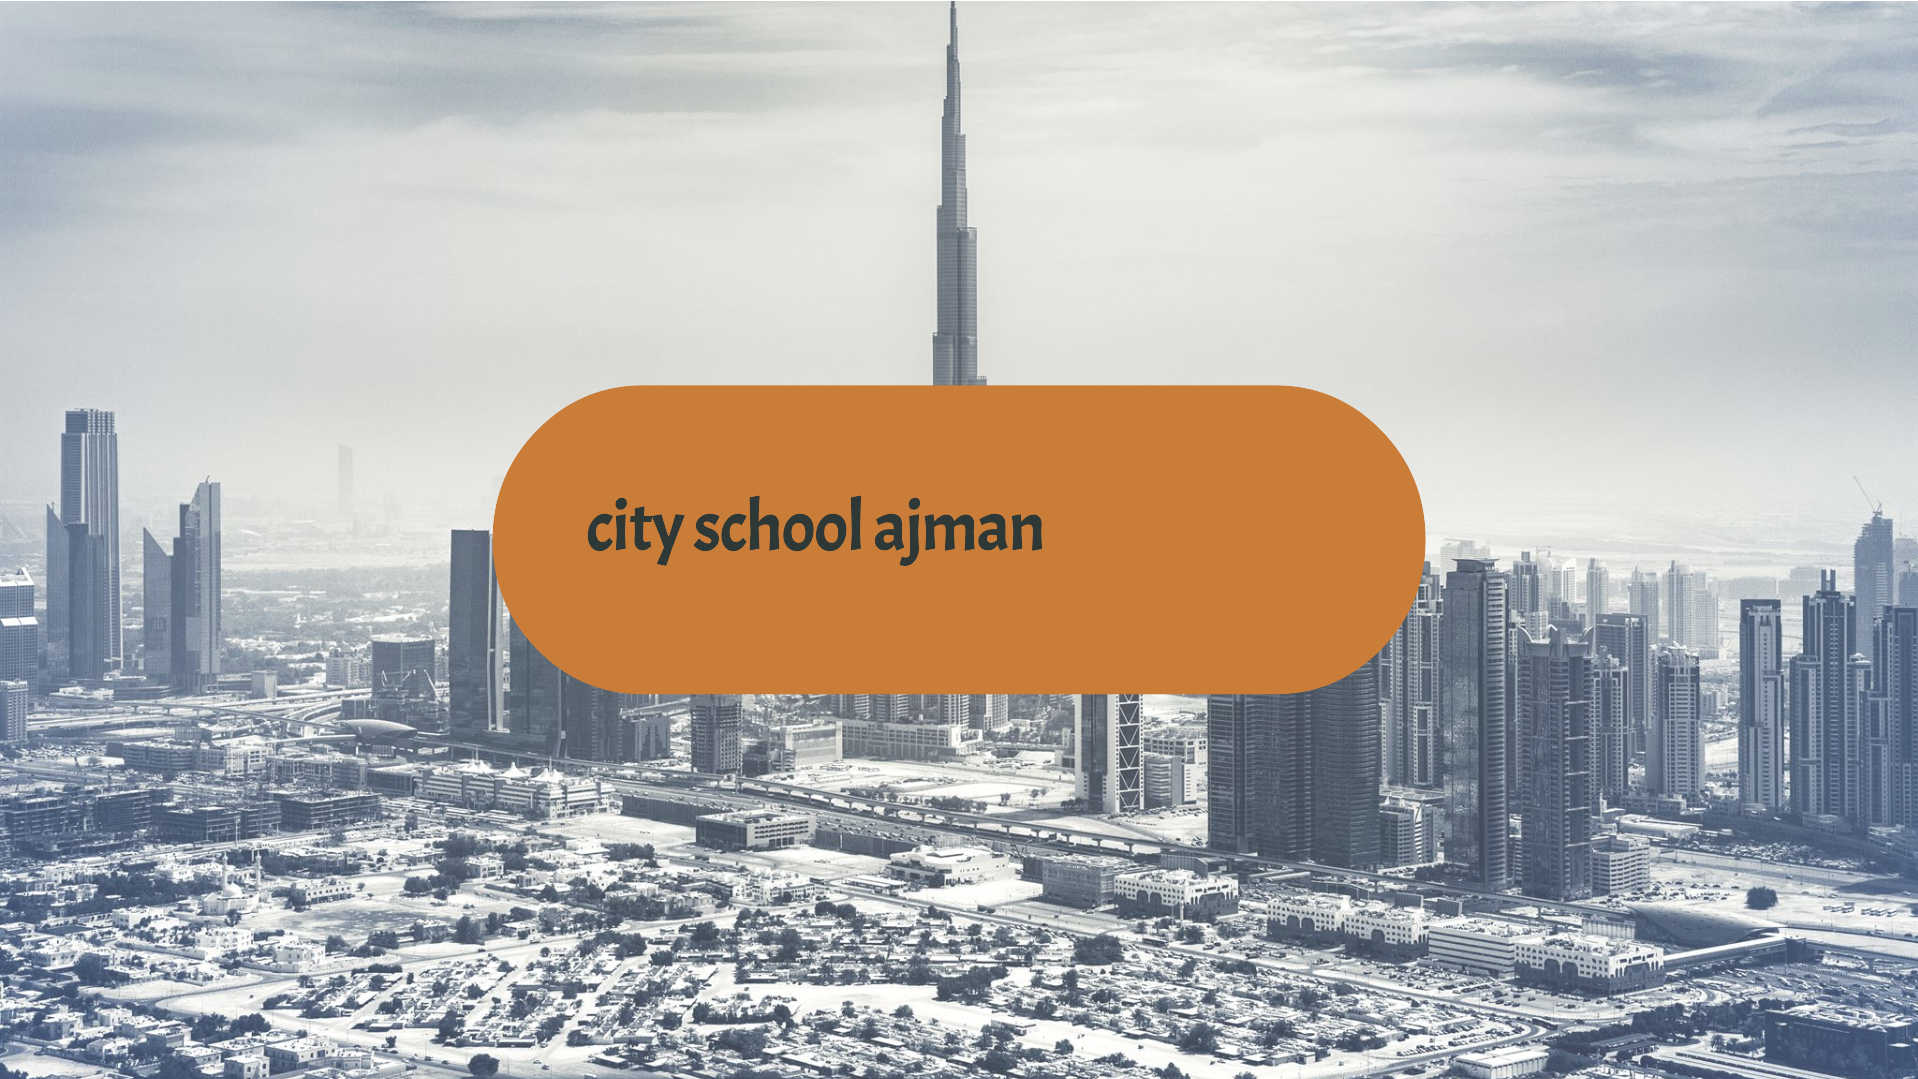 city school ajman